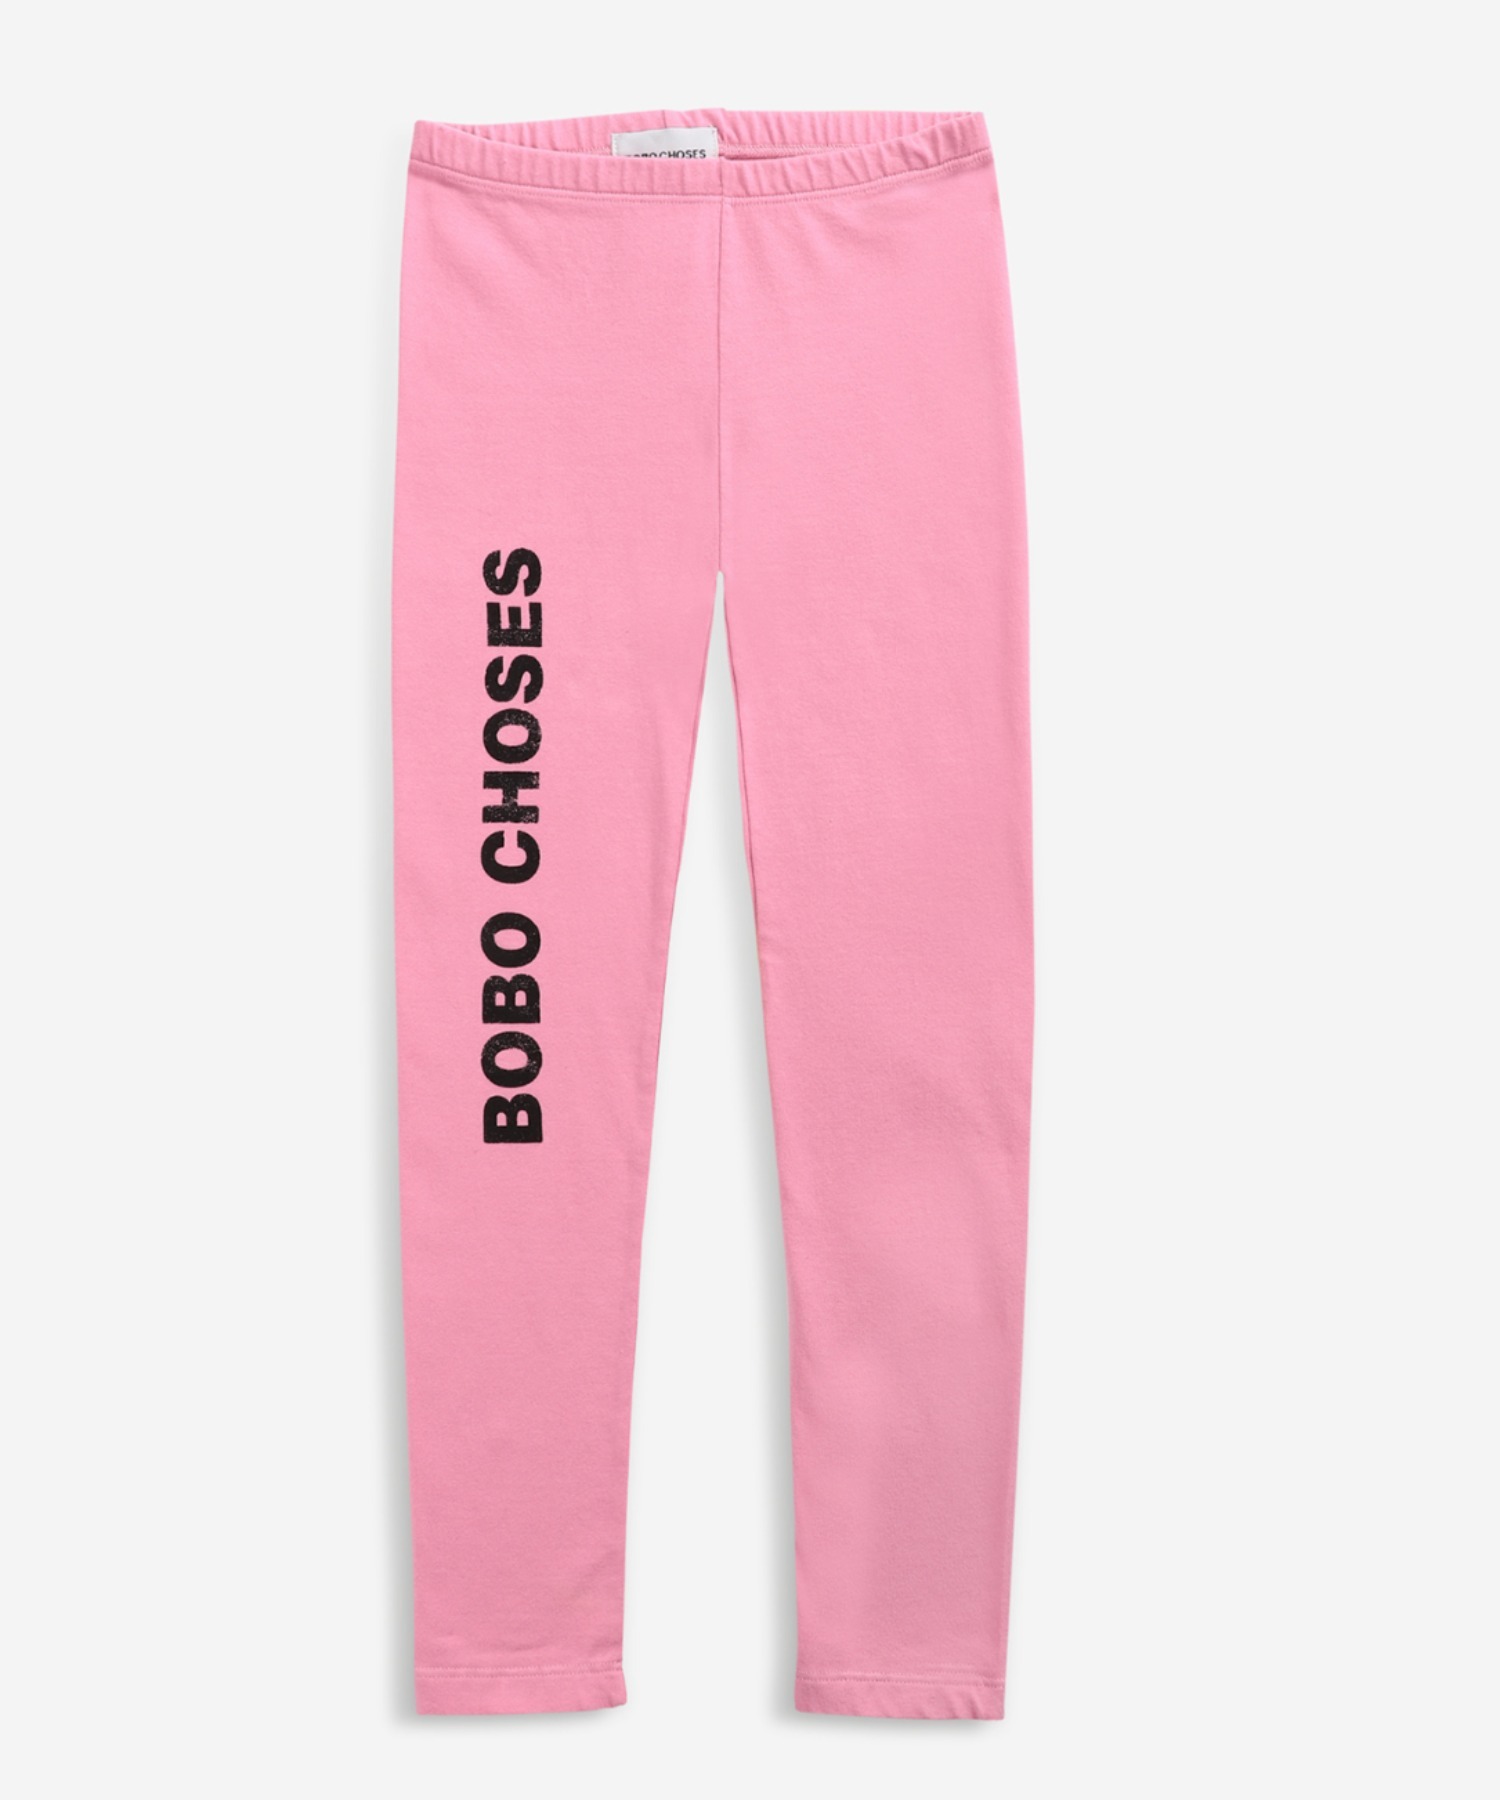 BOBO CHOSESBobo Choses leggings 【SALE／77%OFF】 好評受付中 pink